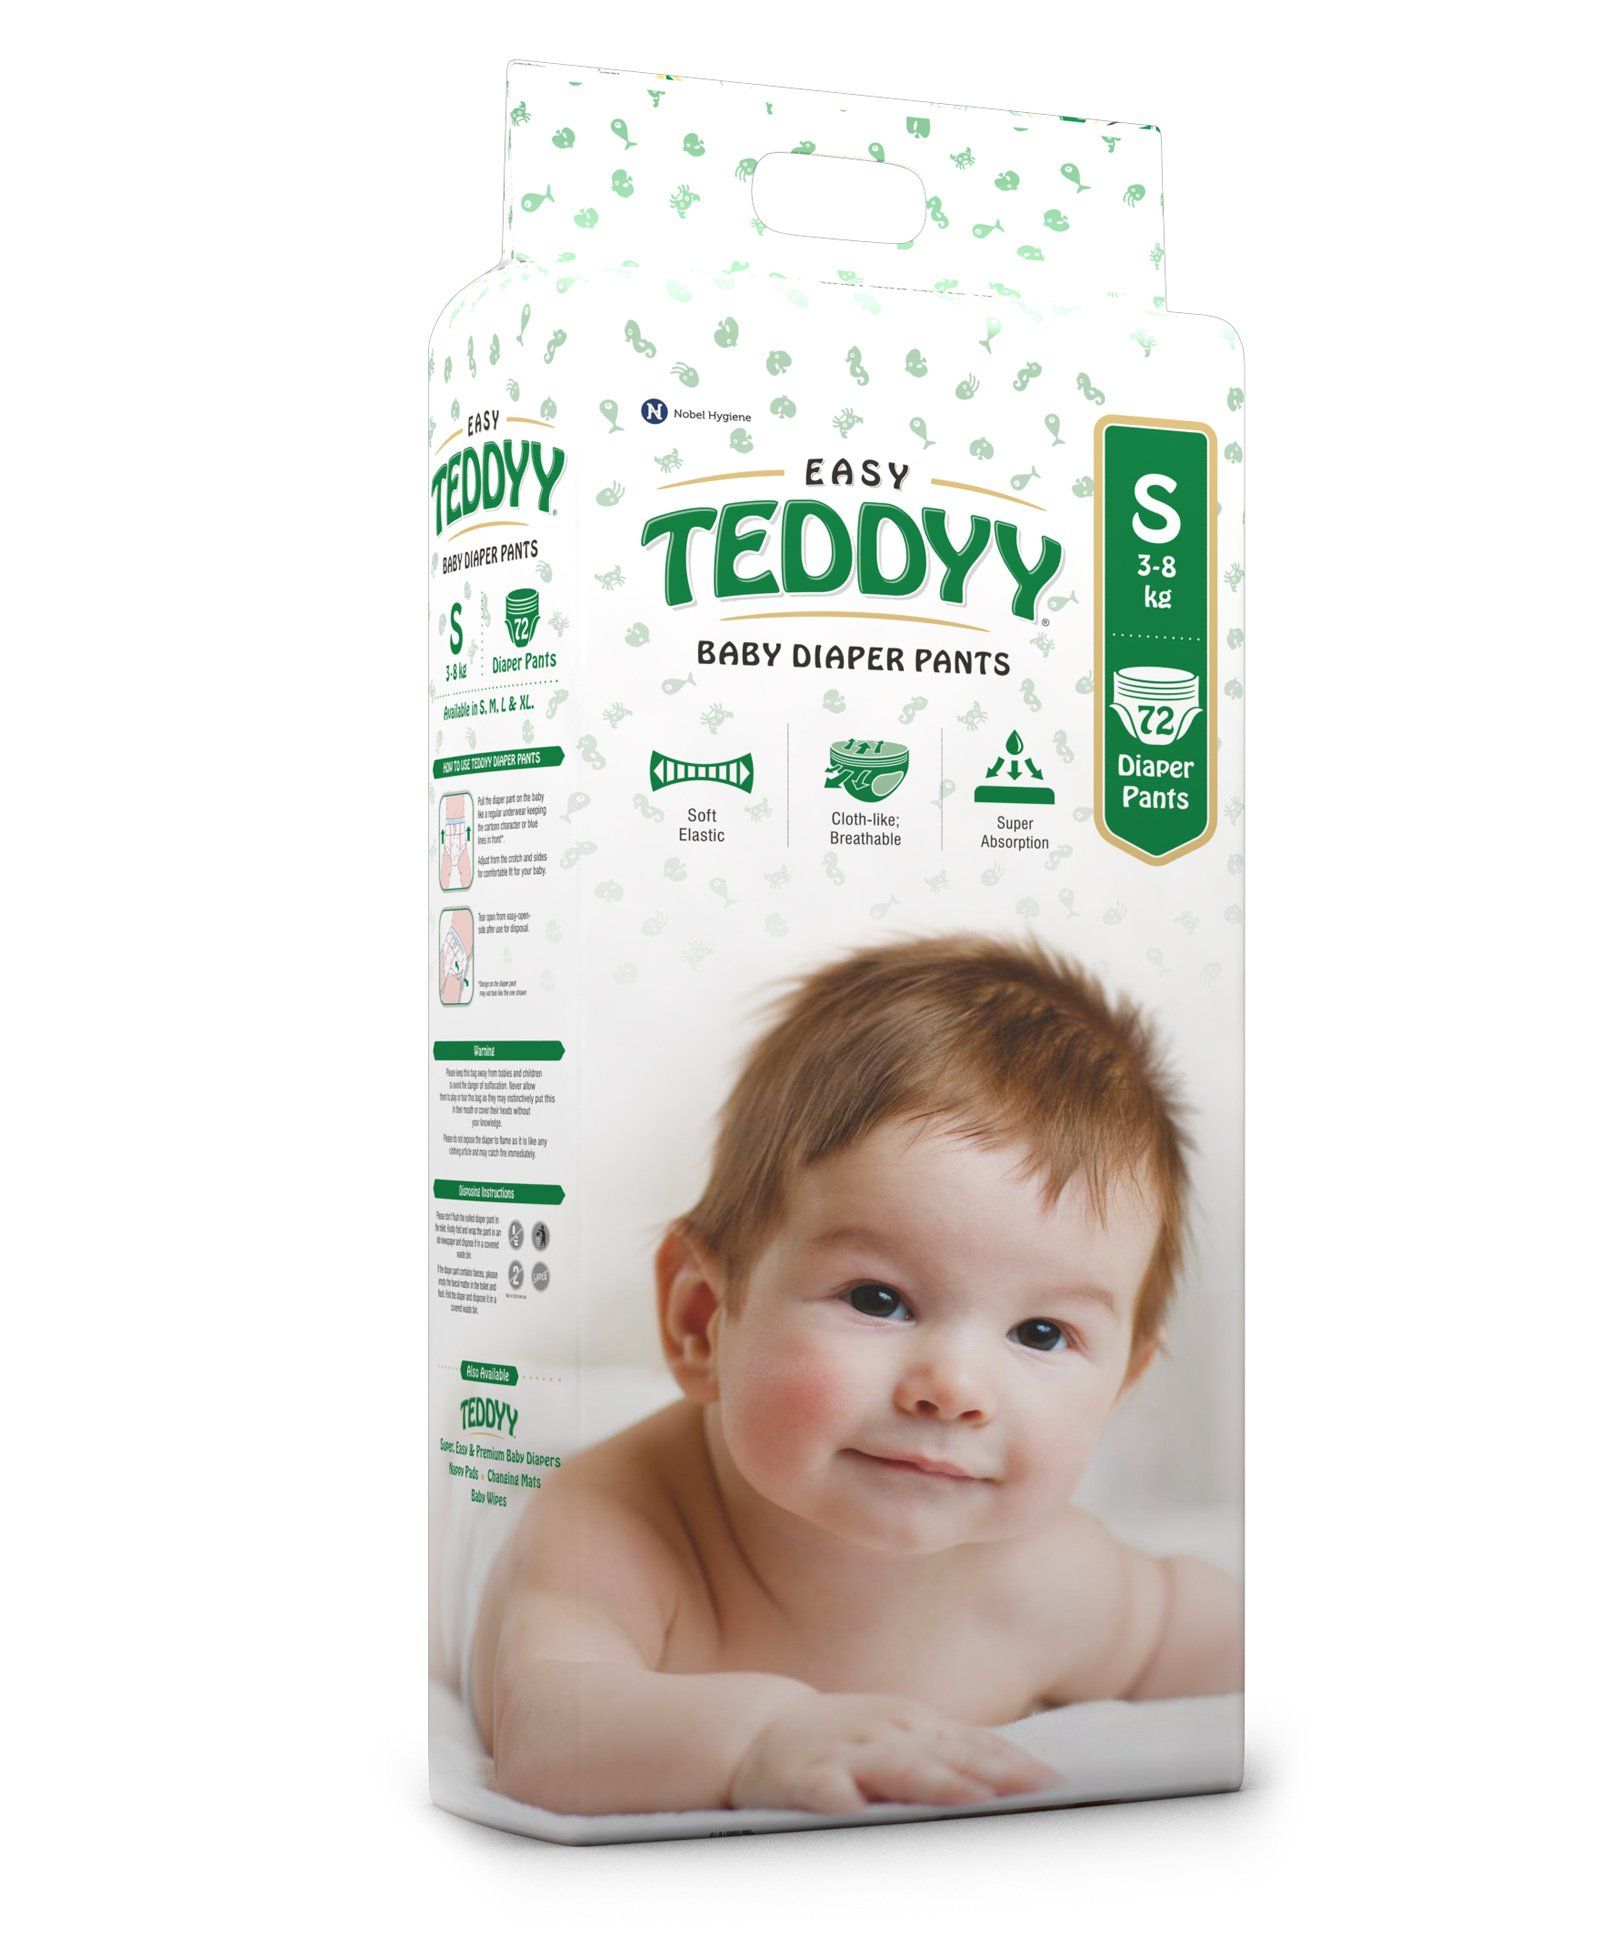 super teddyy diapers